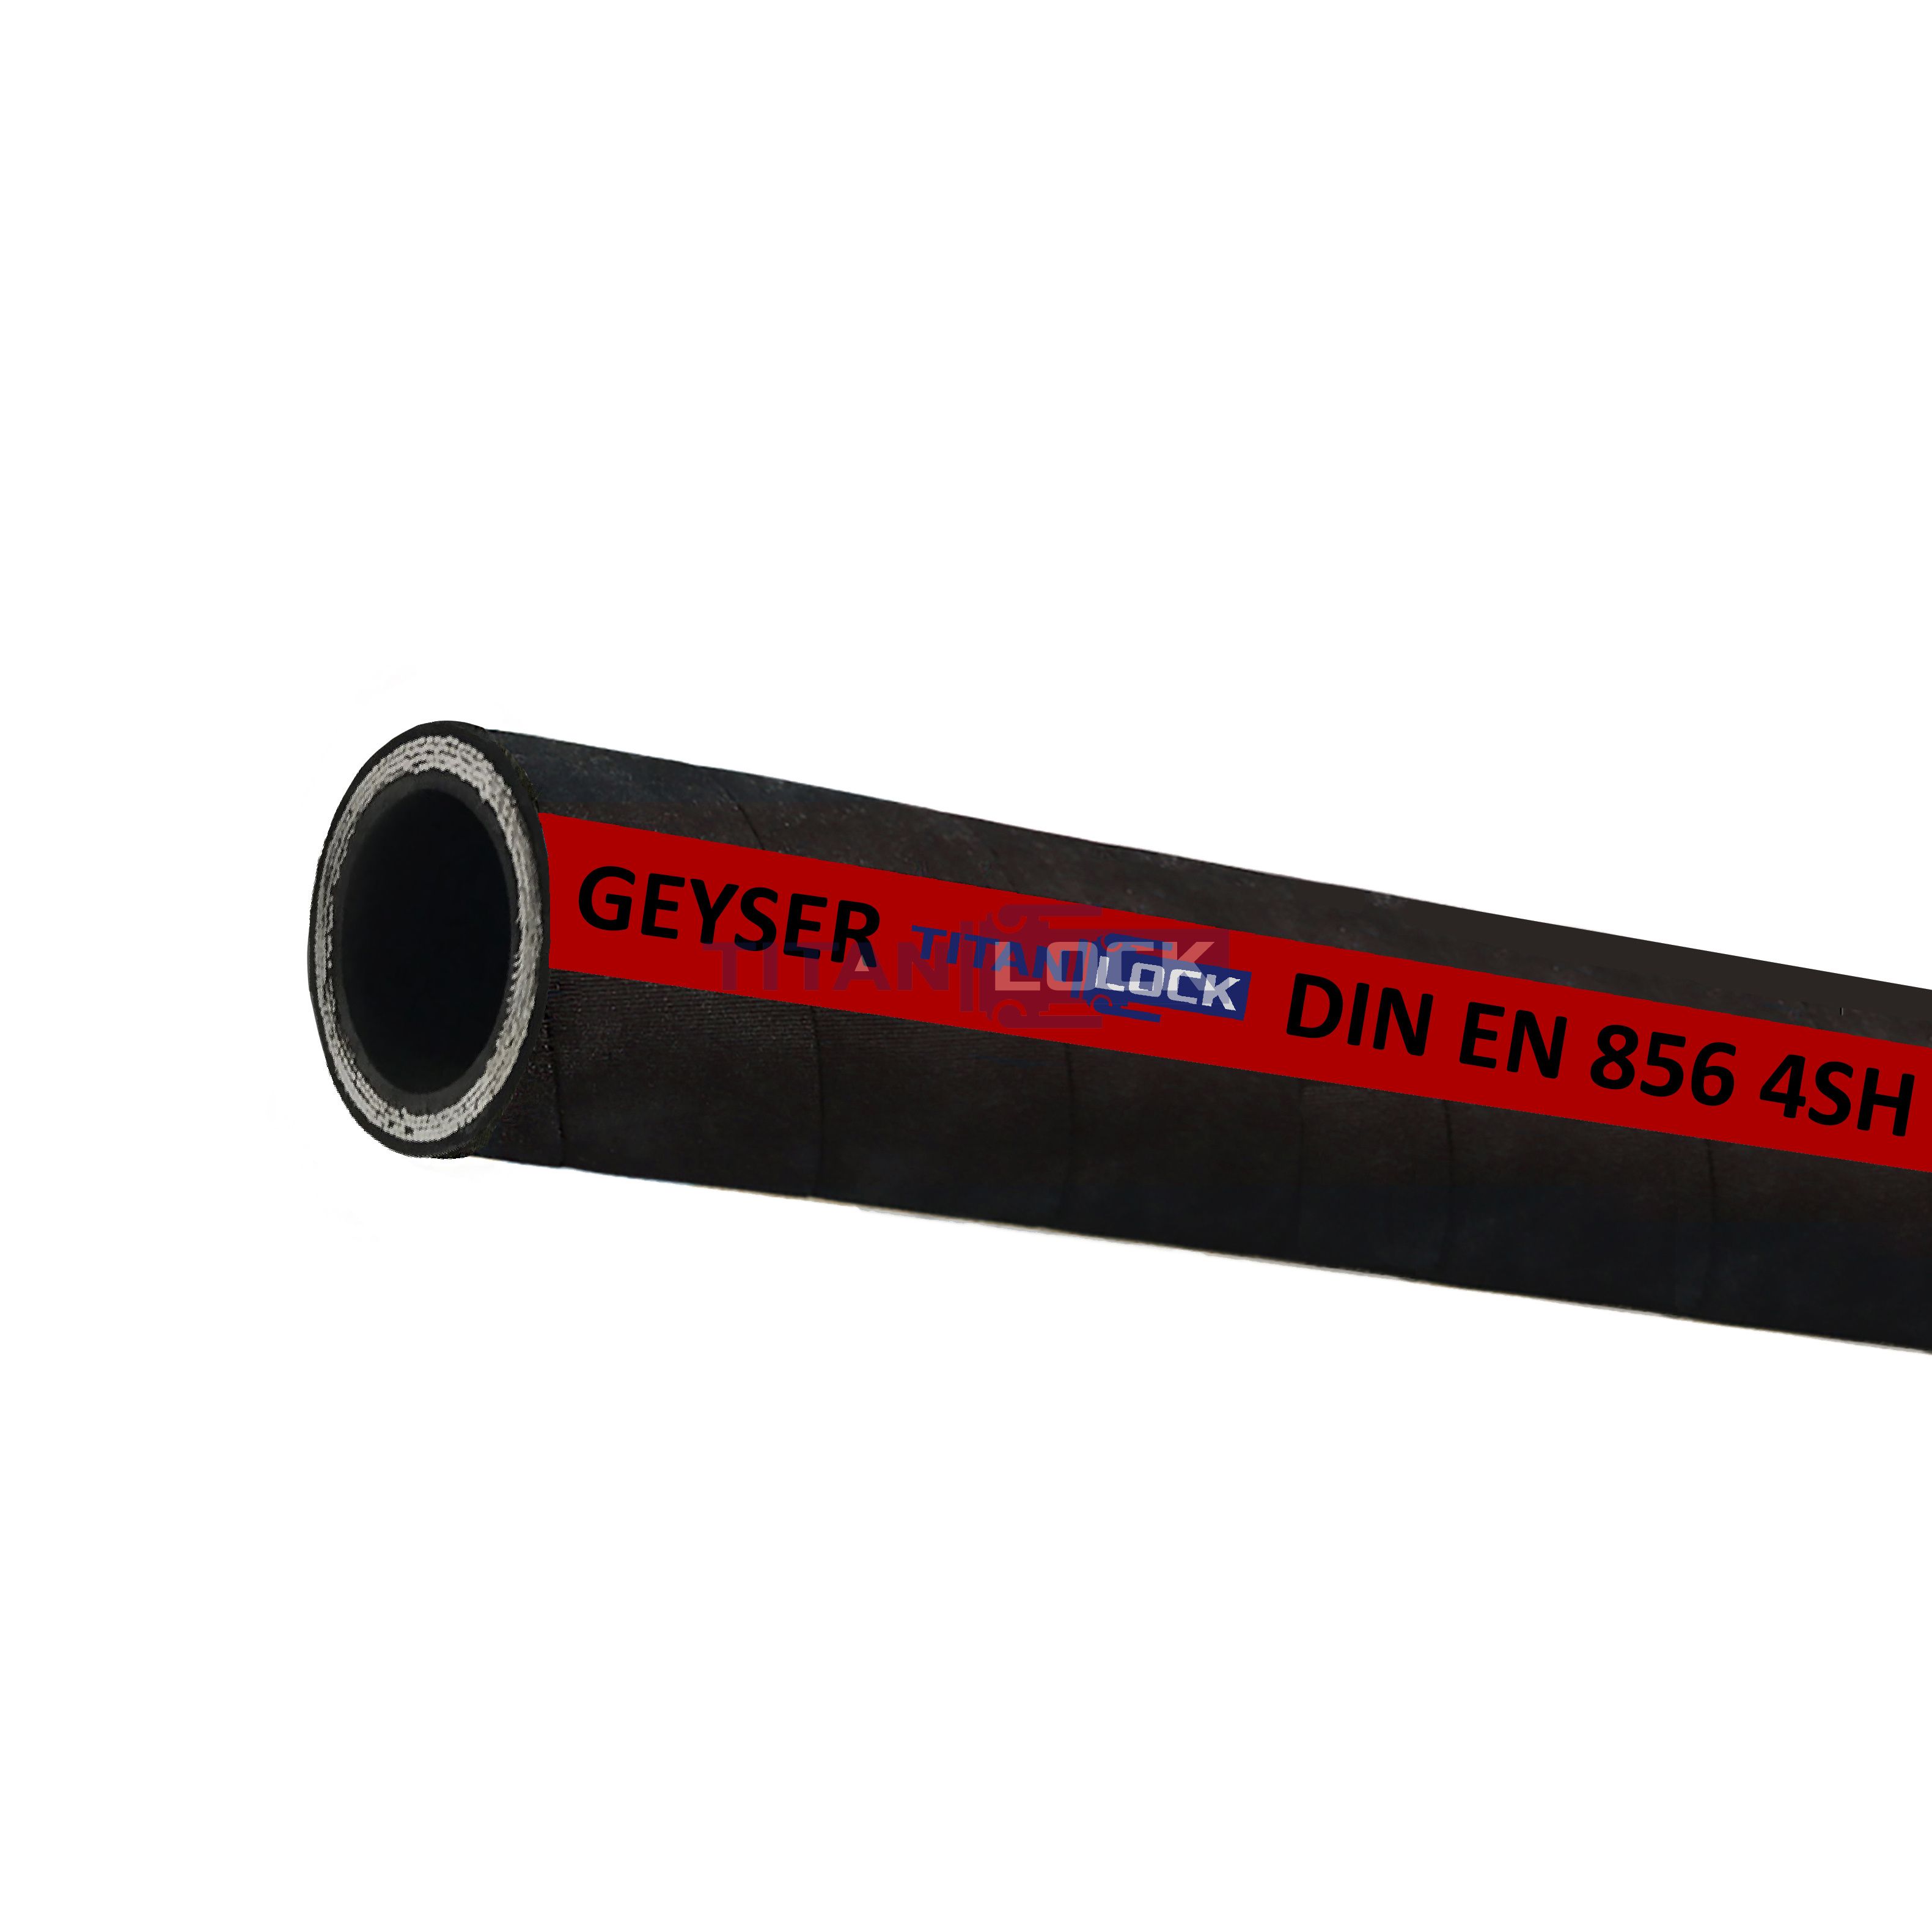 Рукав высокого давления GEYSER 4SH EN856, внутр.диам. 25мм, TLGY025-4SH TITAN LOCK